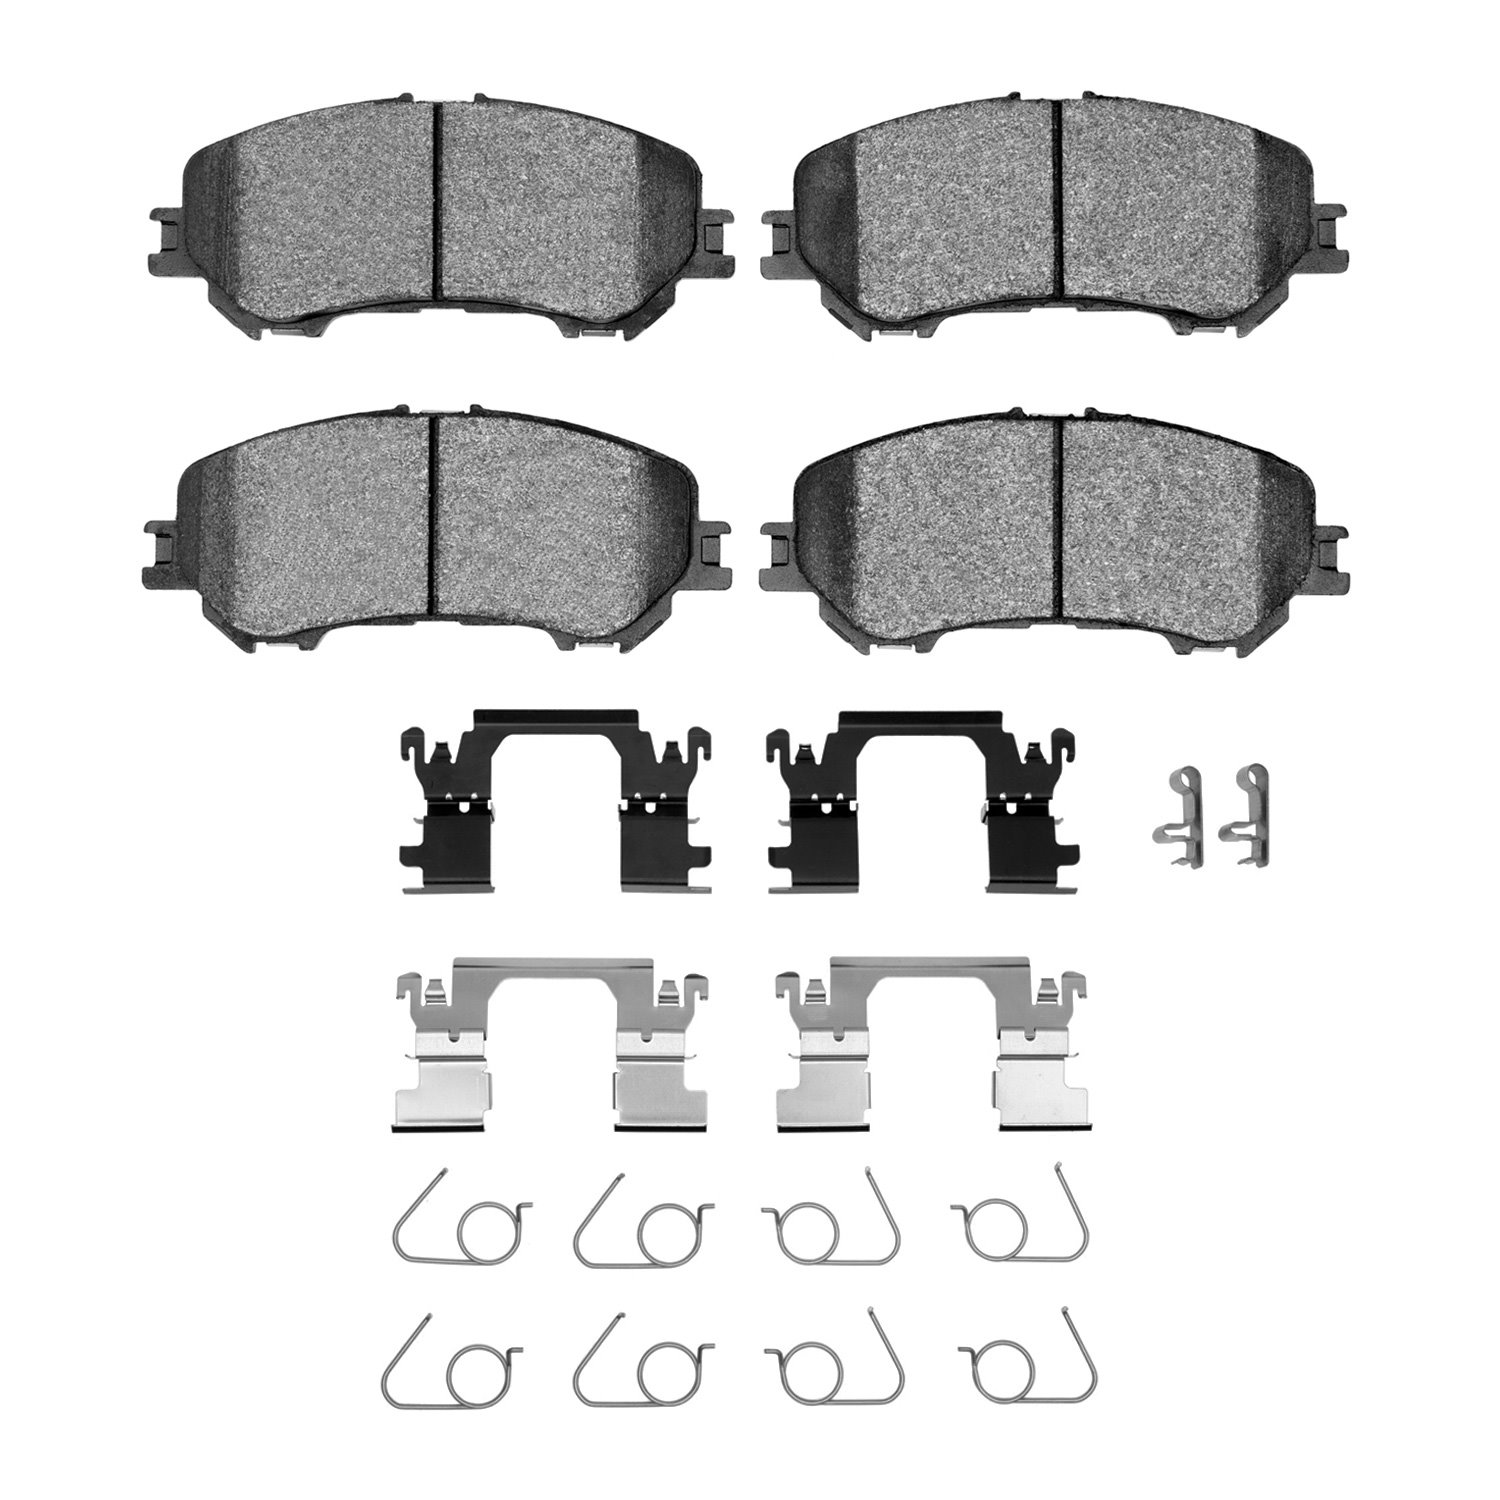 1310-1737-01 3000-Series Ceramic Brake Pads & Hardware Kit, Fits Select Multiple Makes/Models, Position: Front